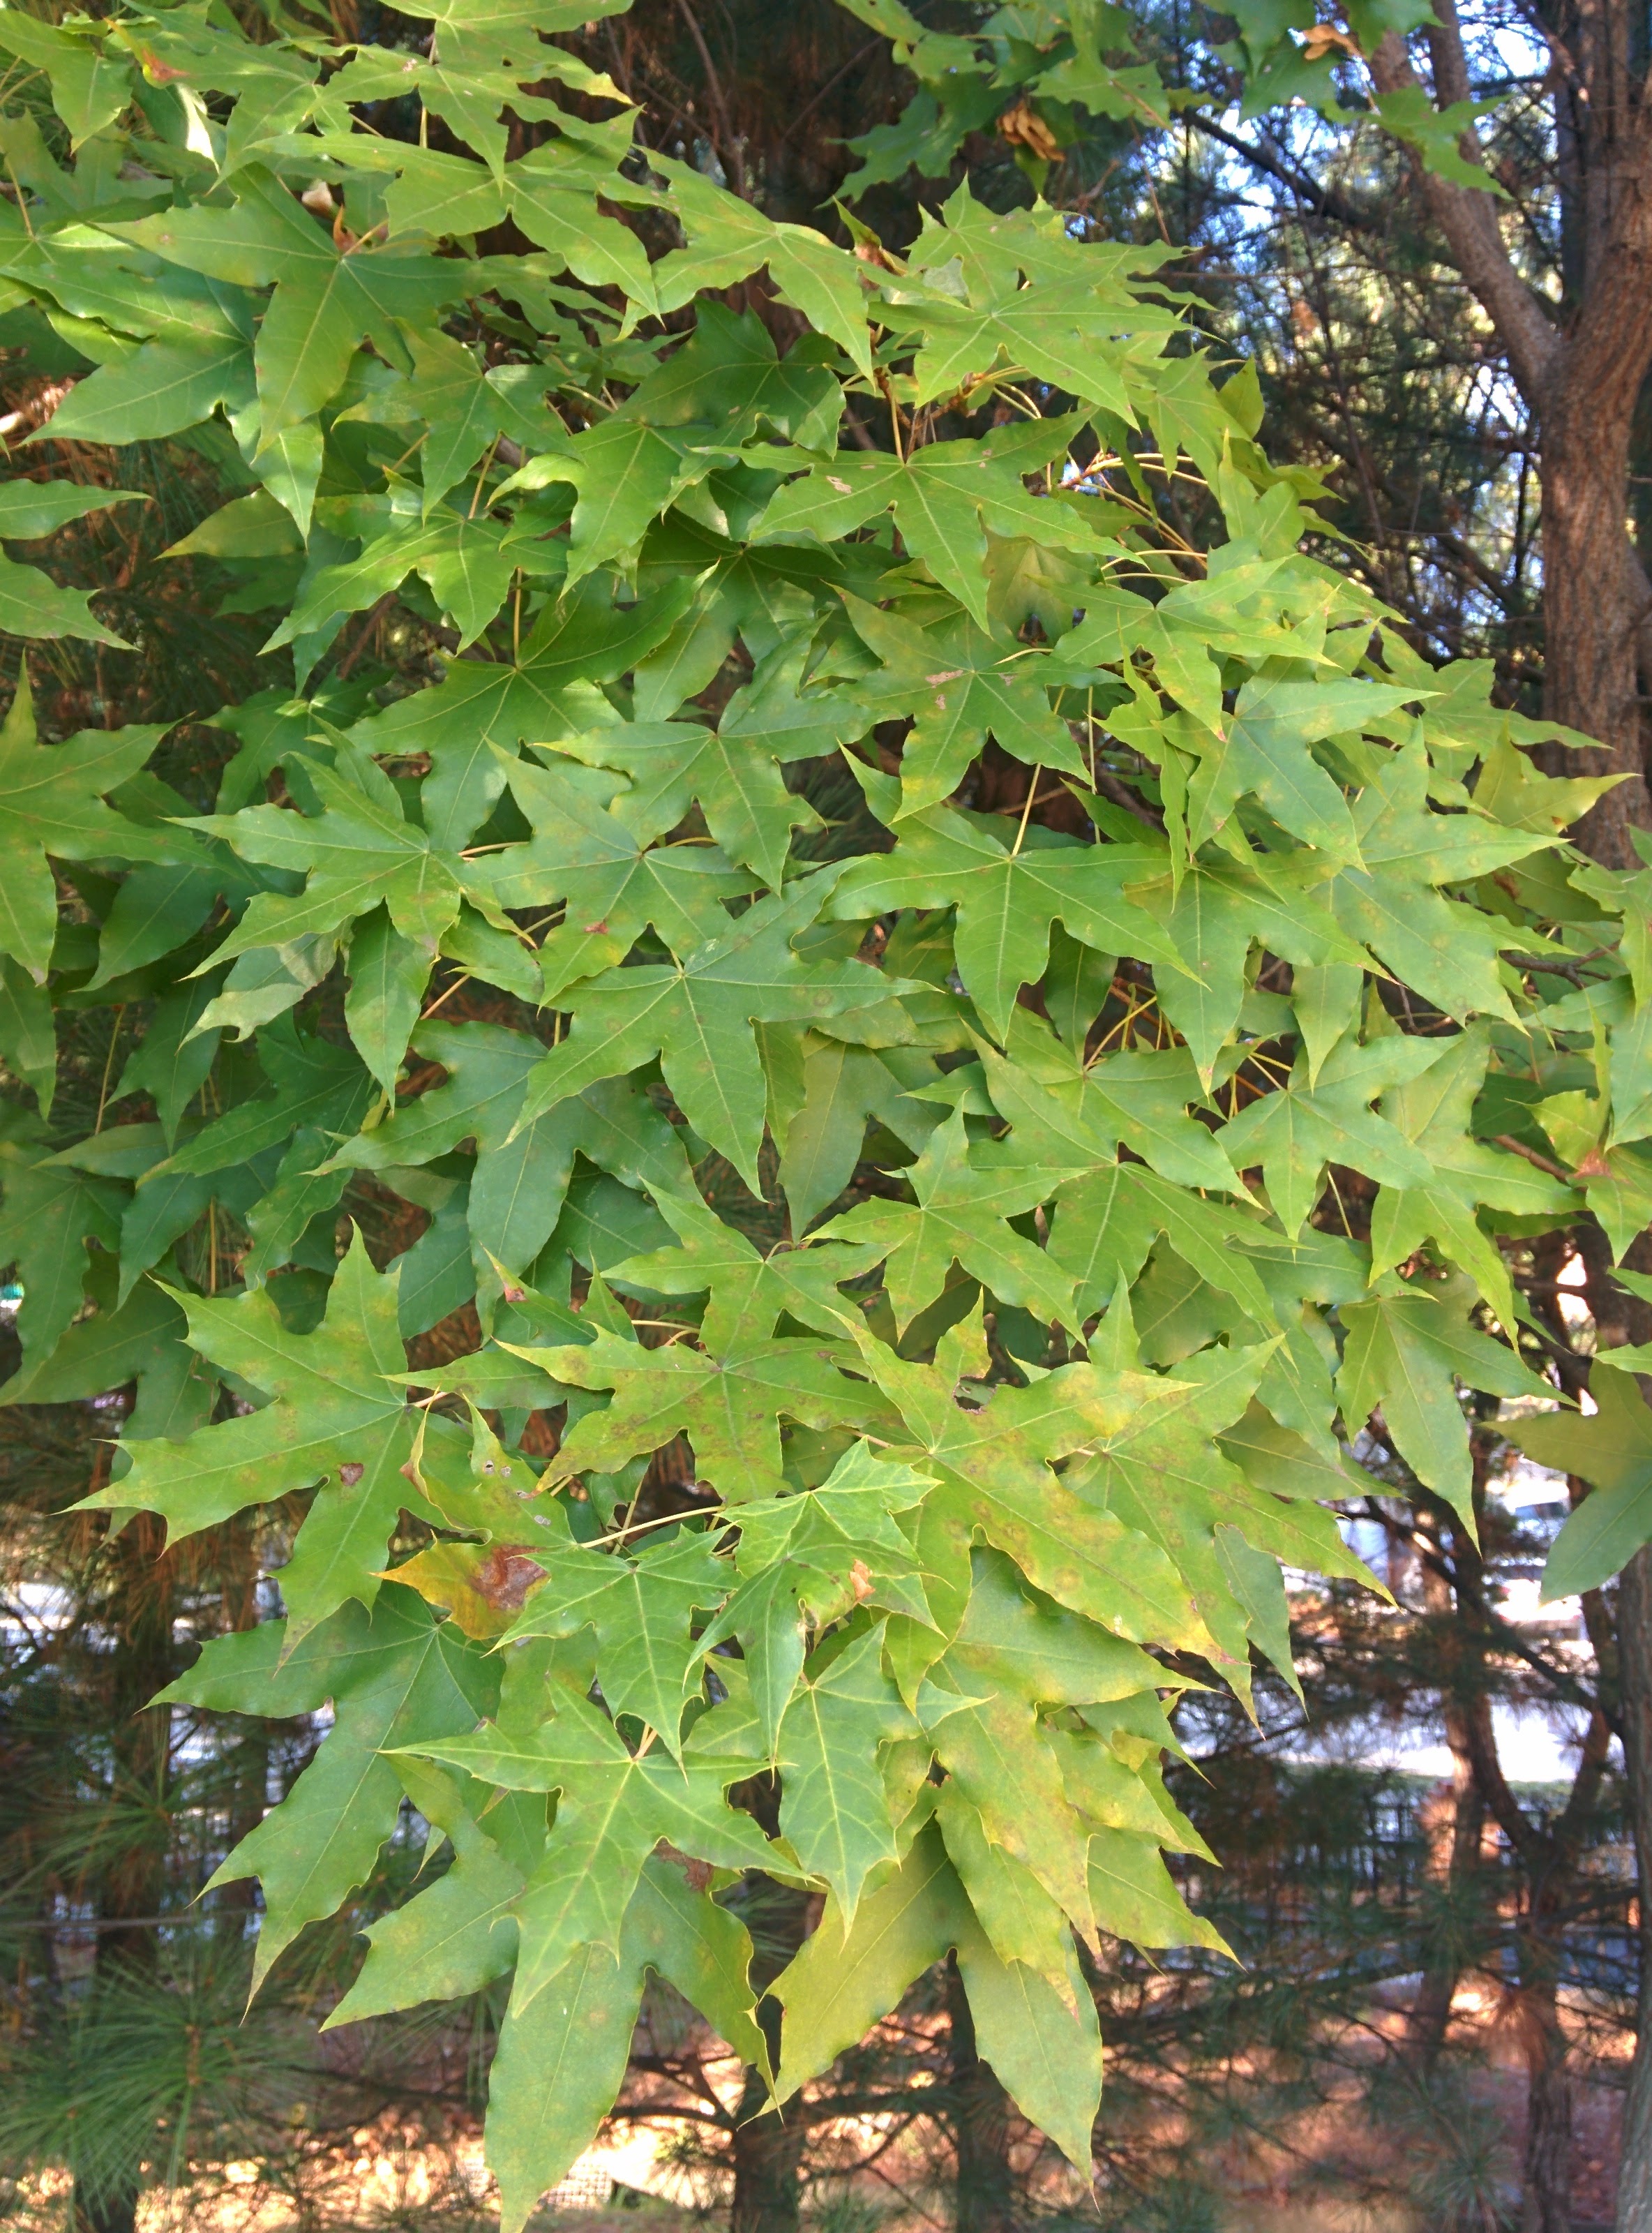 IMG_20151013_161818.jpg 아직은 생생한 초록색의 단풍나무 닮은 잎과 줄기 -- 고로쇠나무